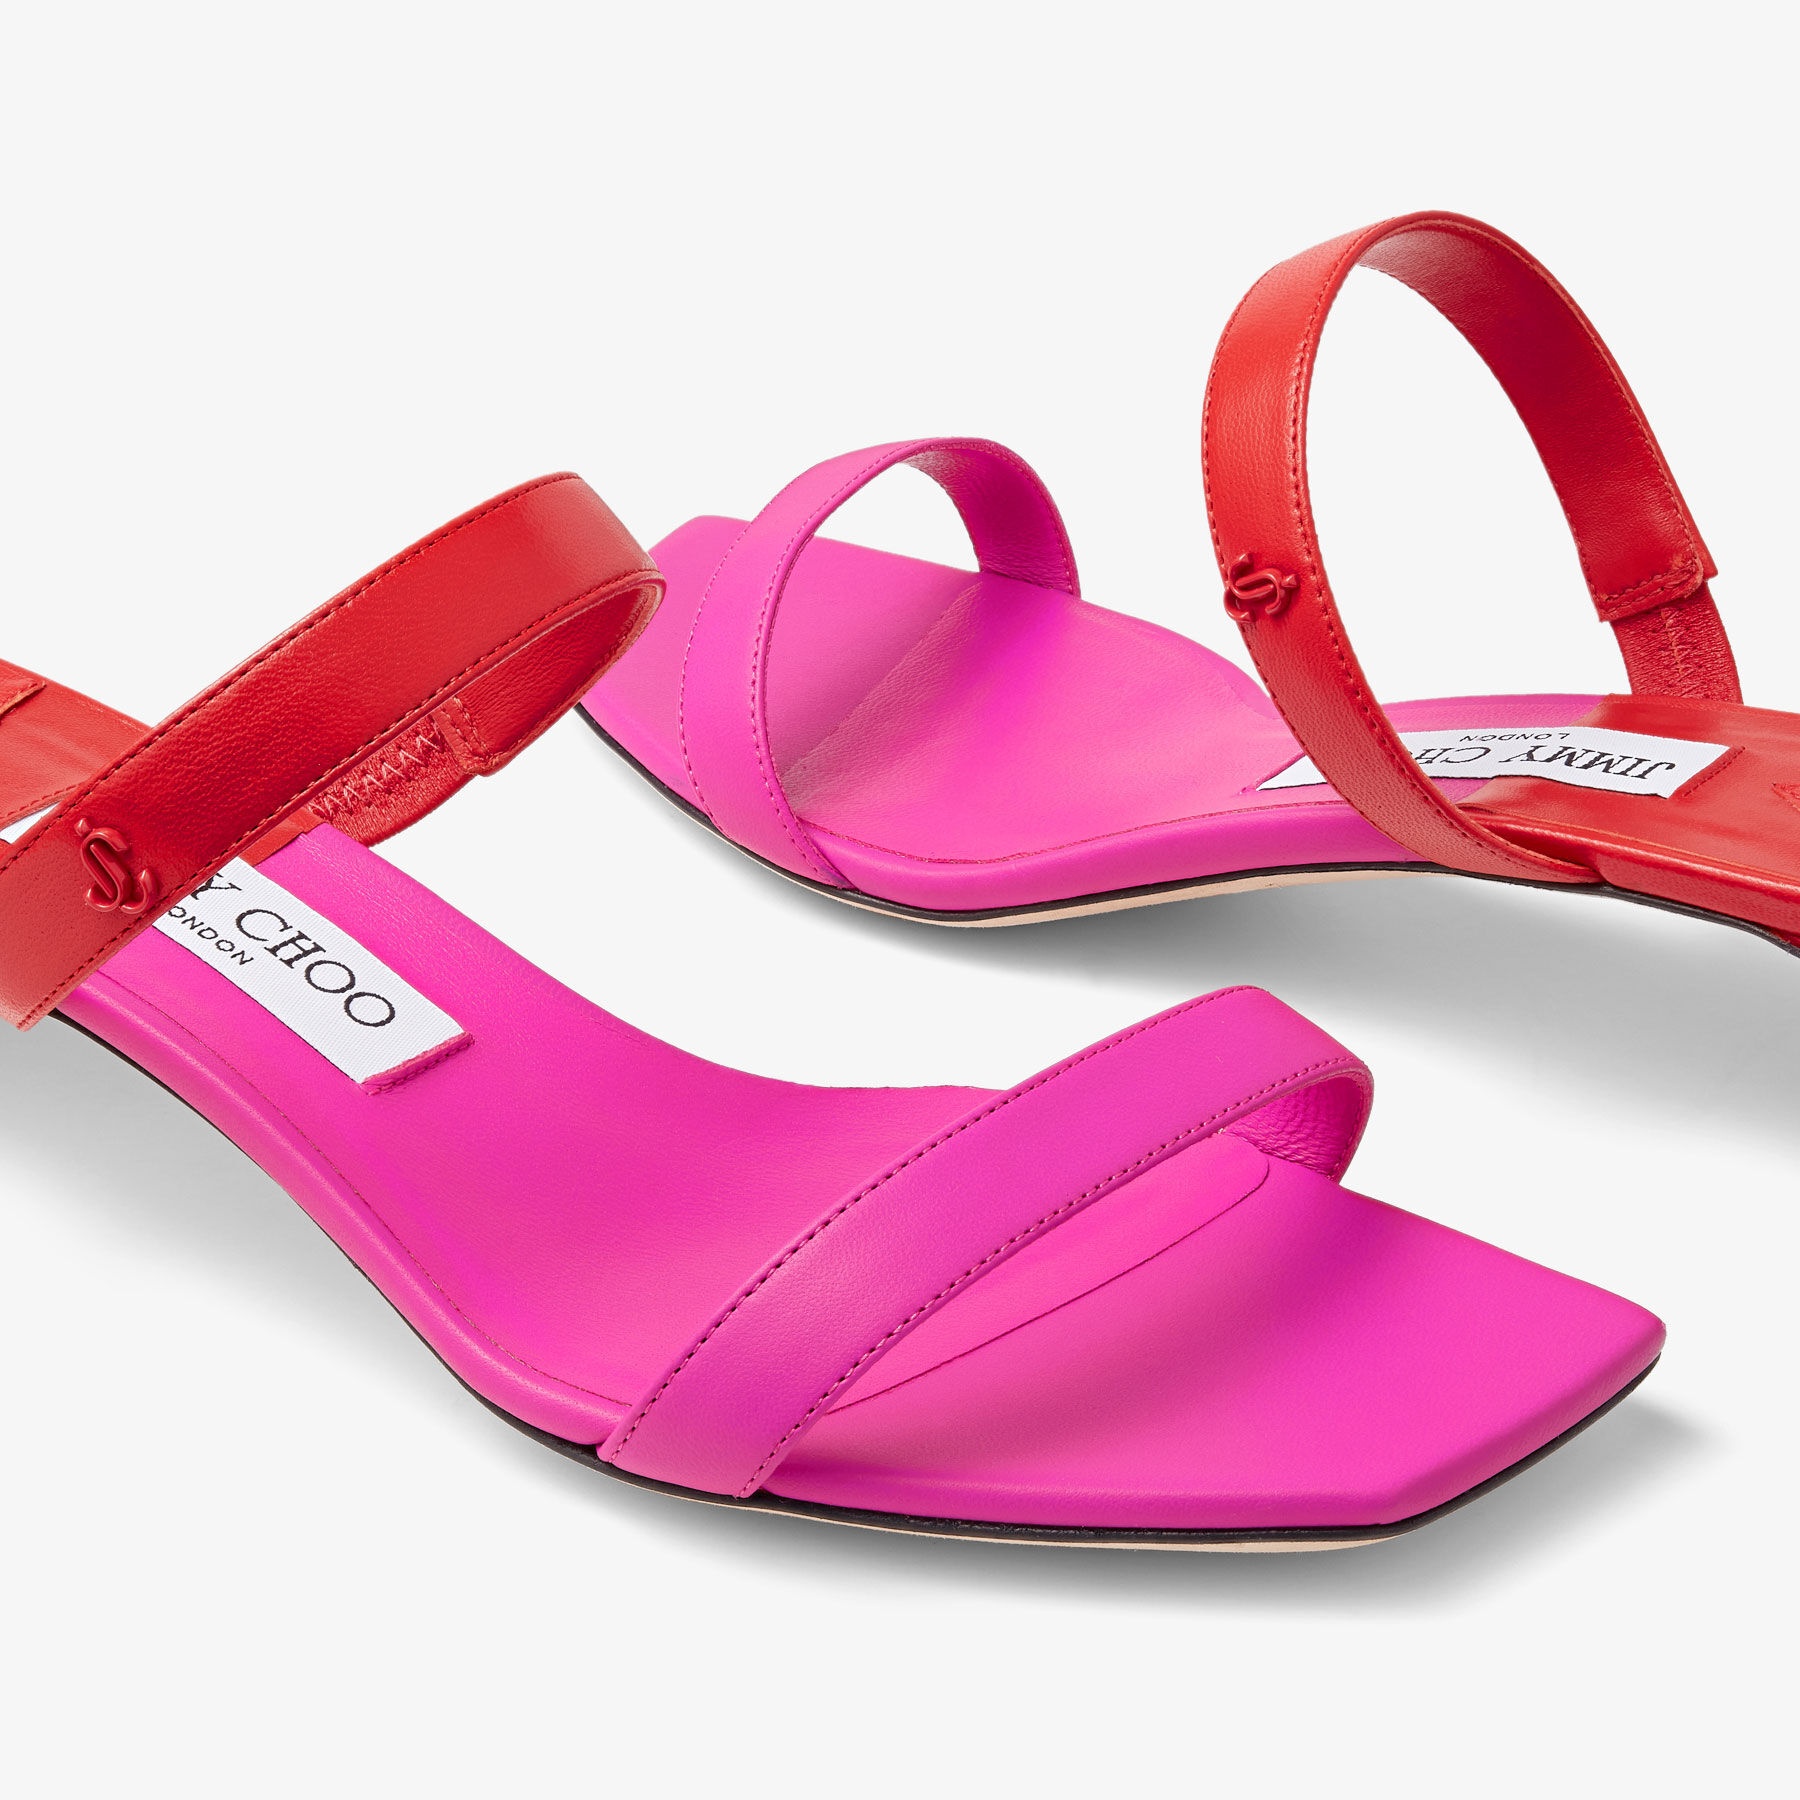 Kyda 35
Fuchsia and Pink Nappa Leather Sandals - 3